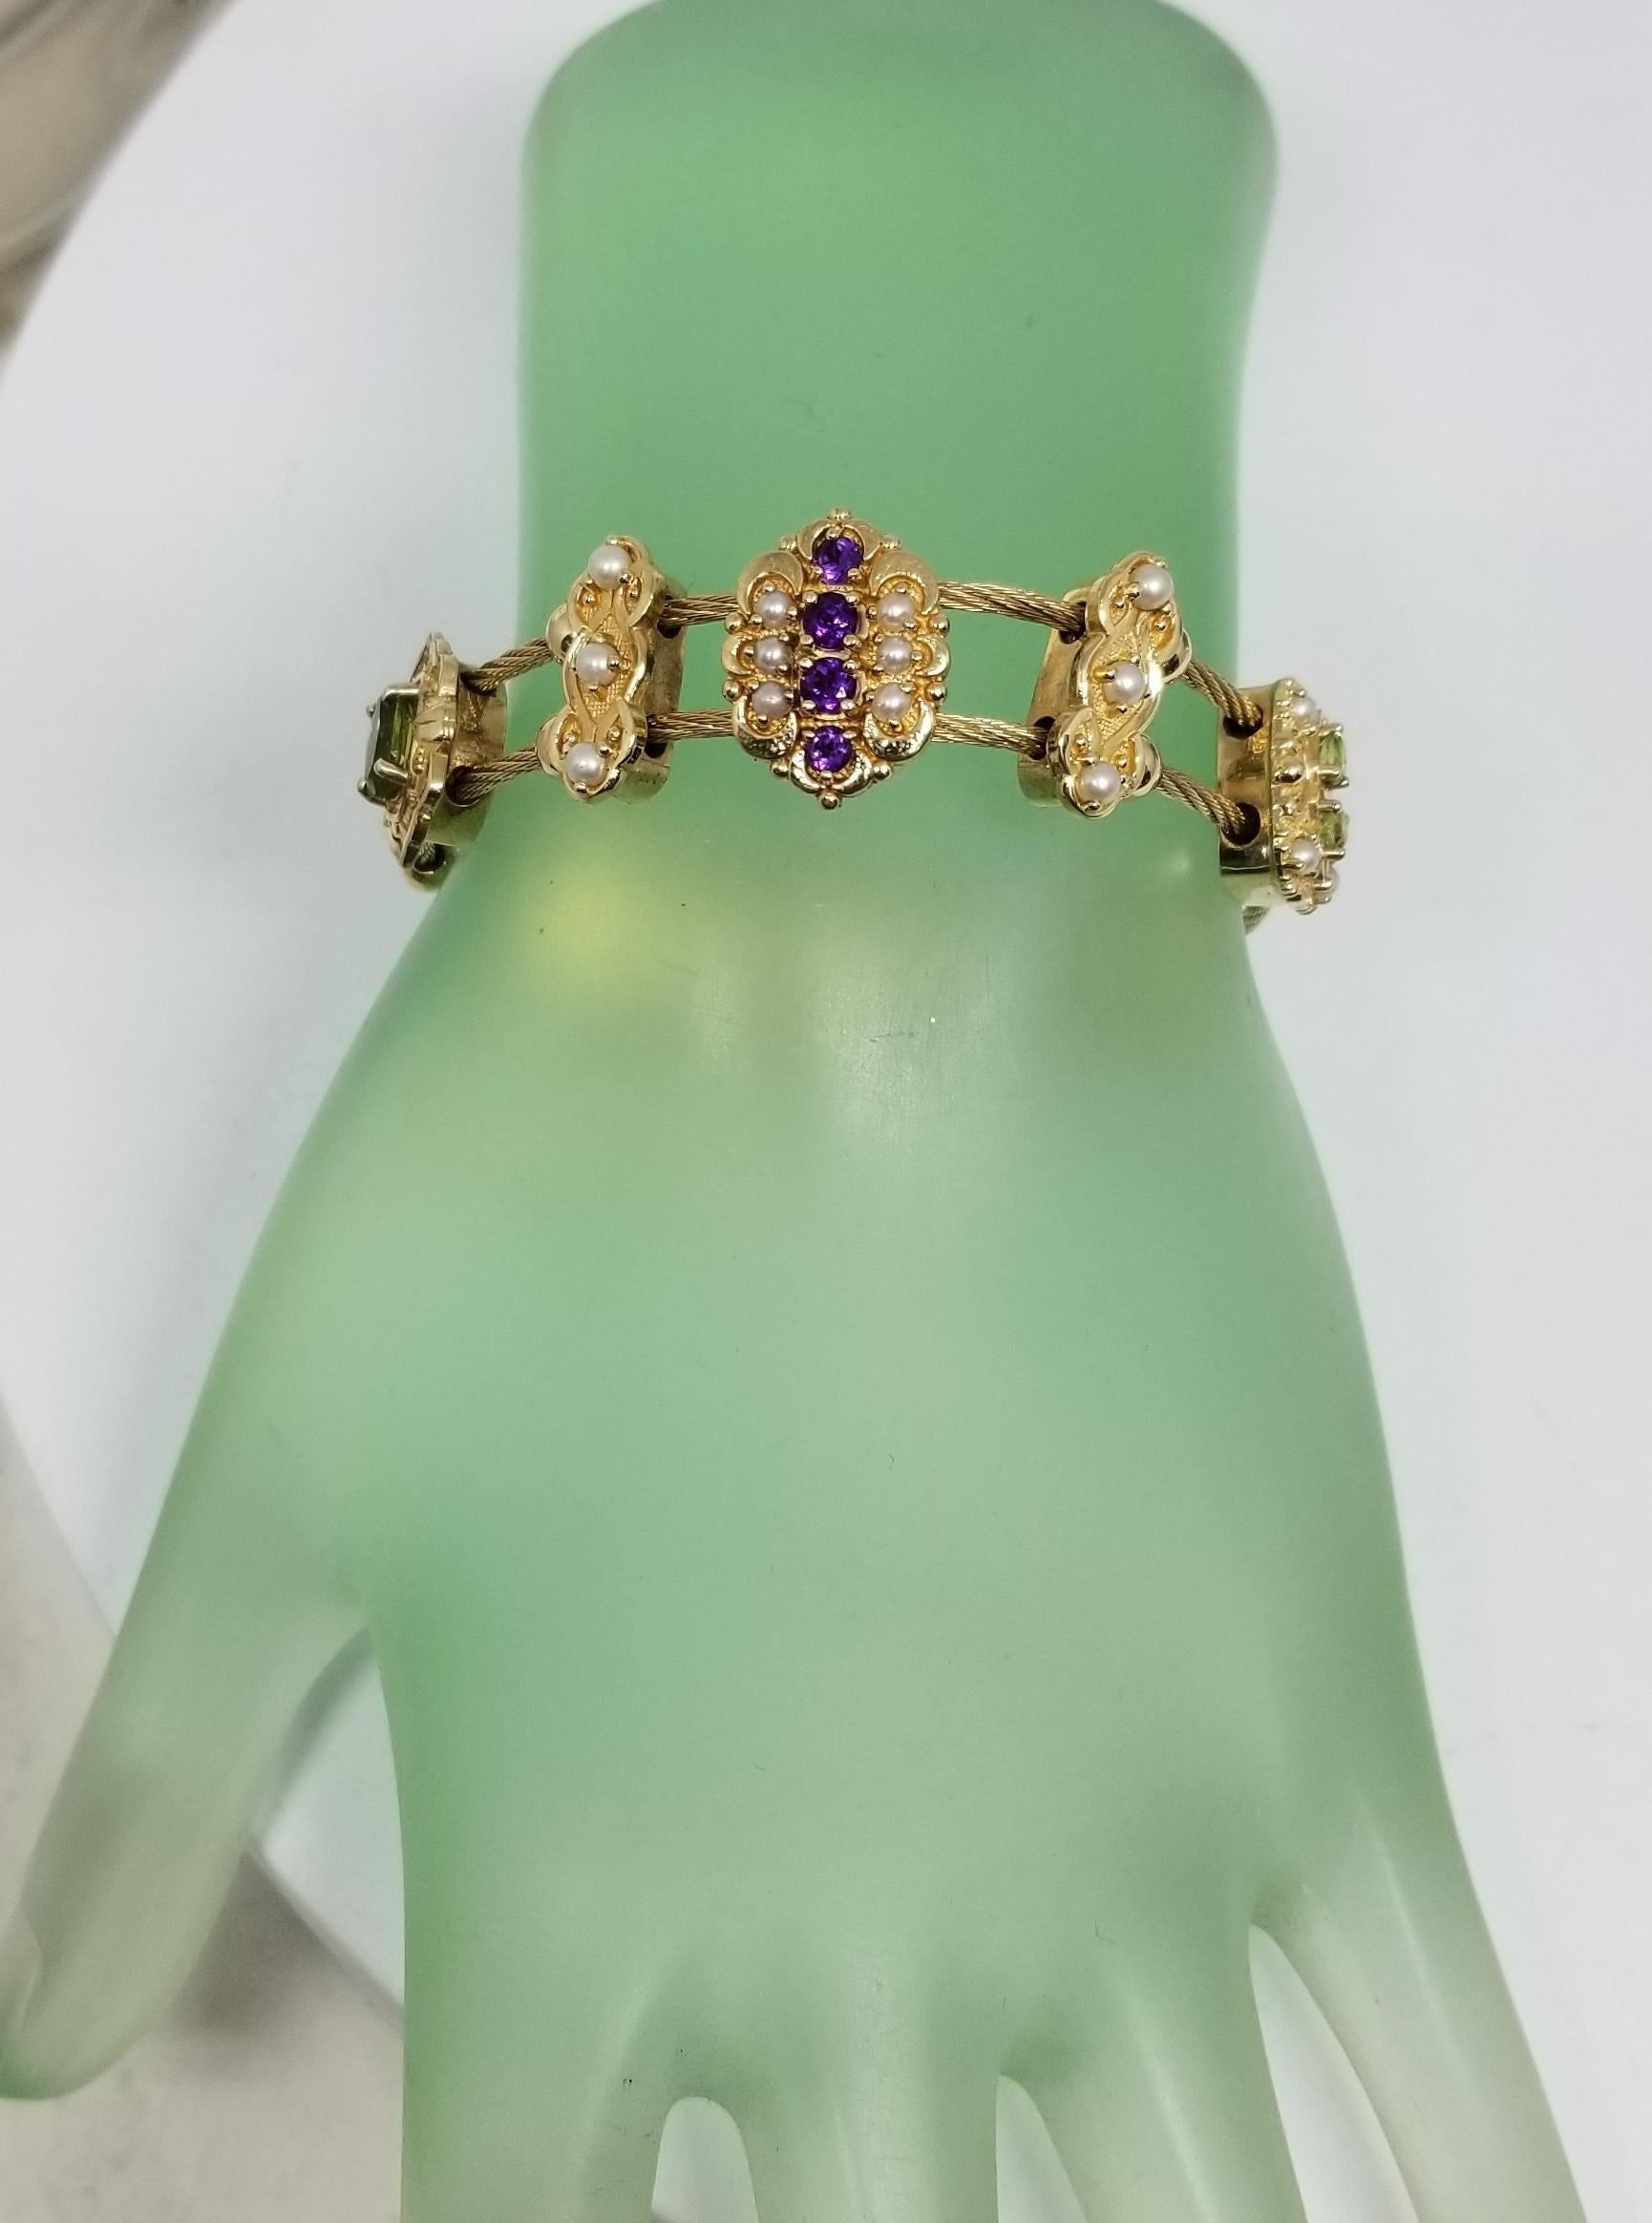 14k gold slide bracelet charms